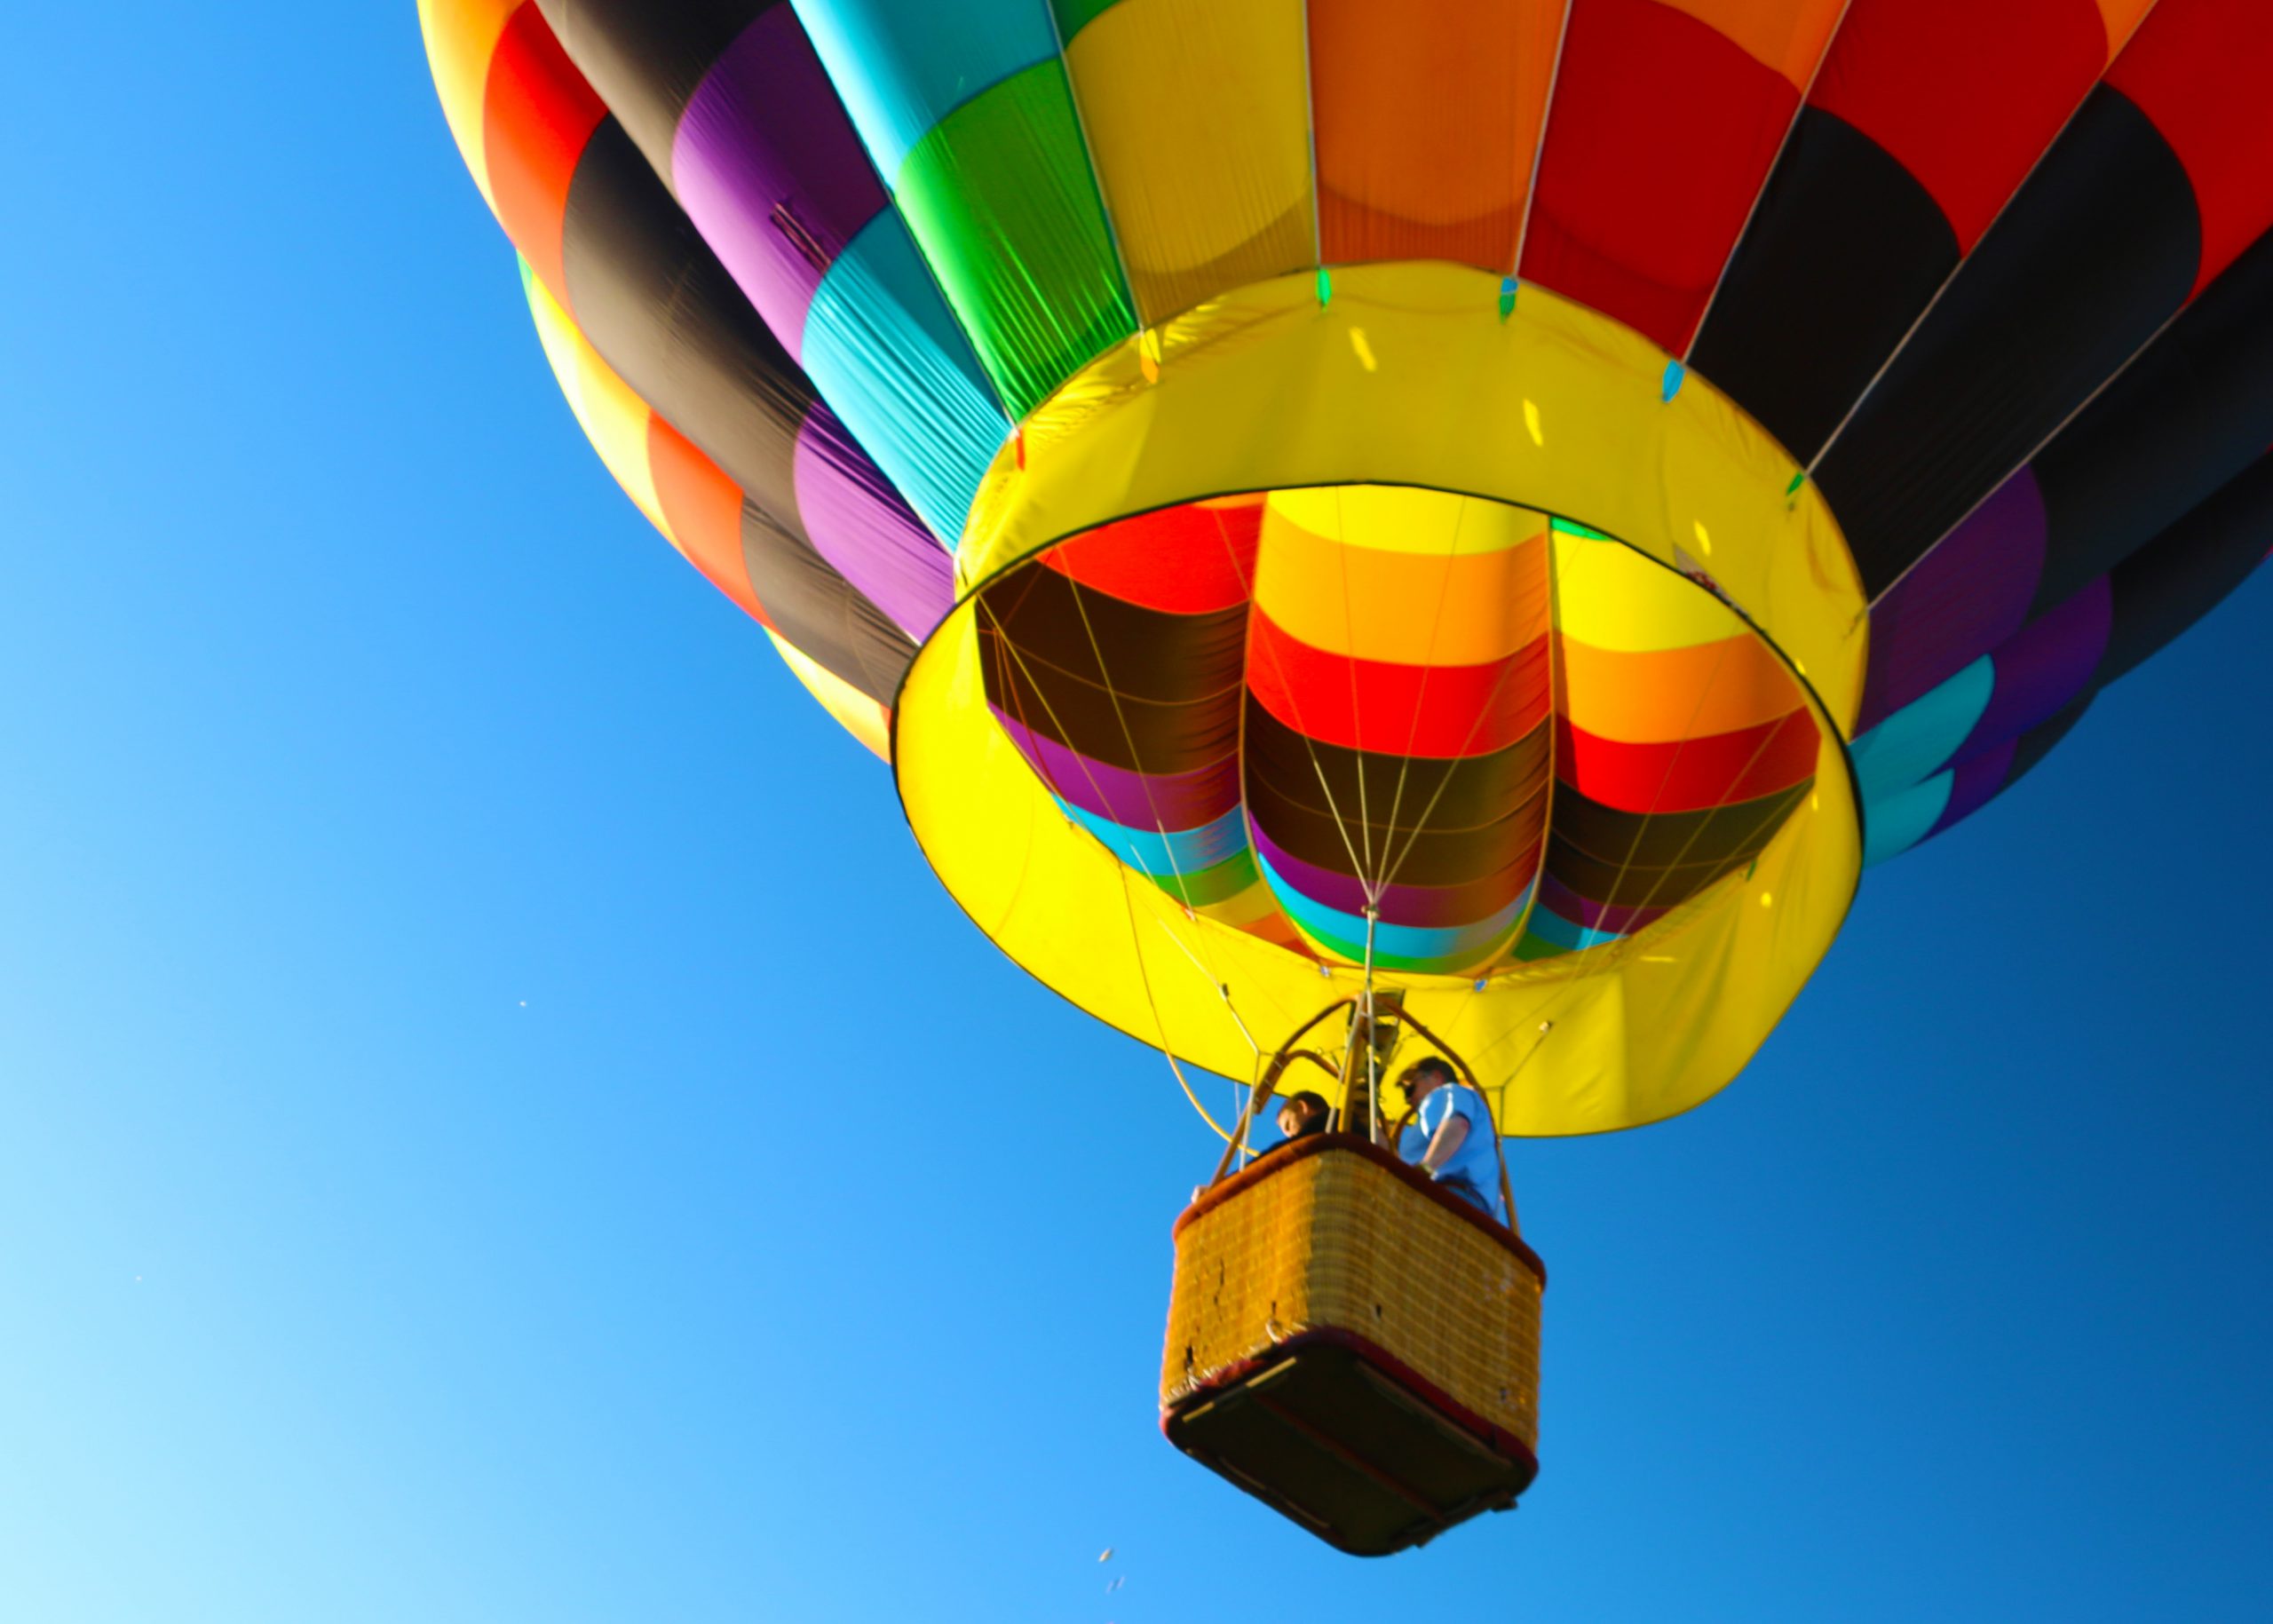 Balloon festival returns to Qatar on December 9